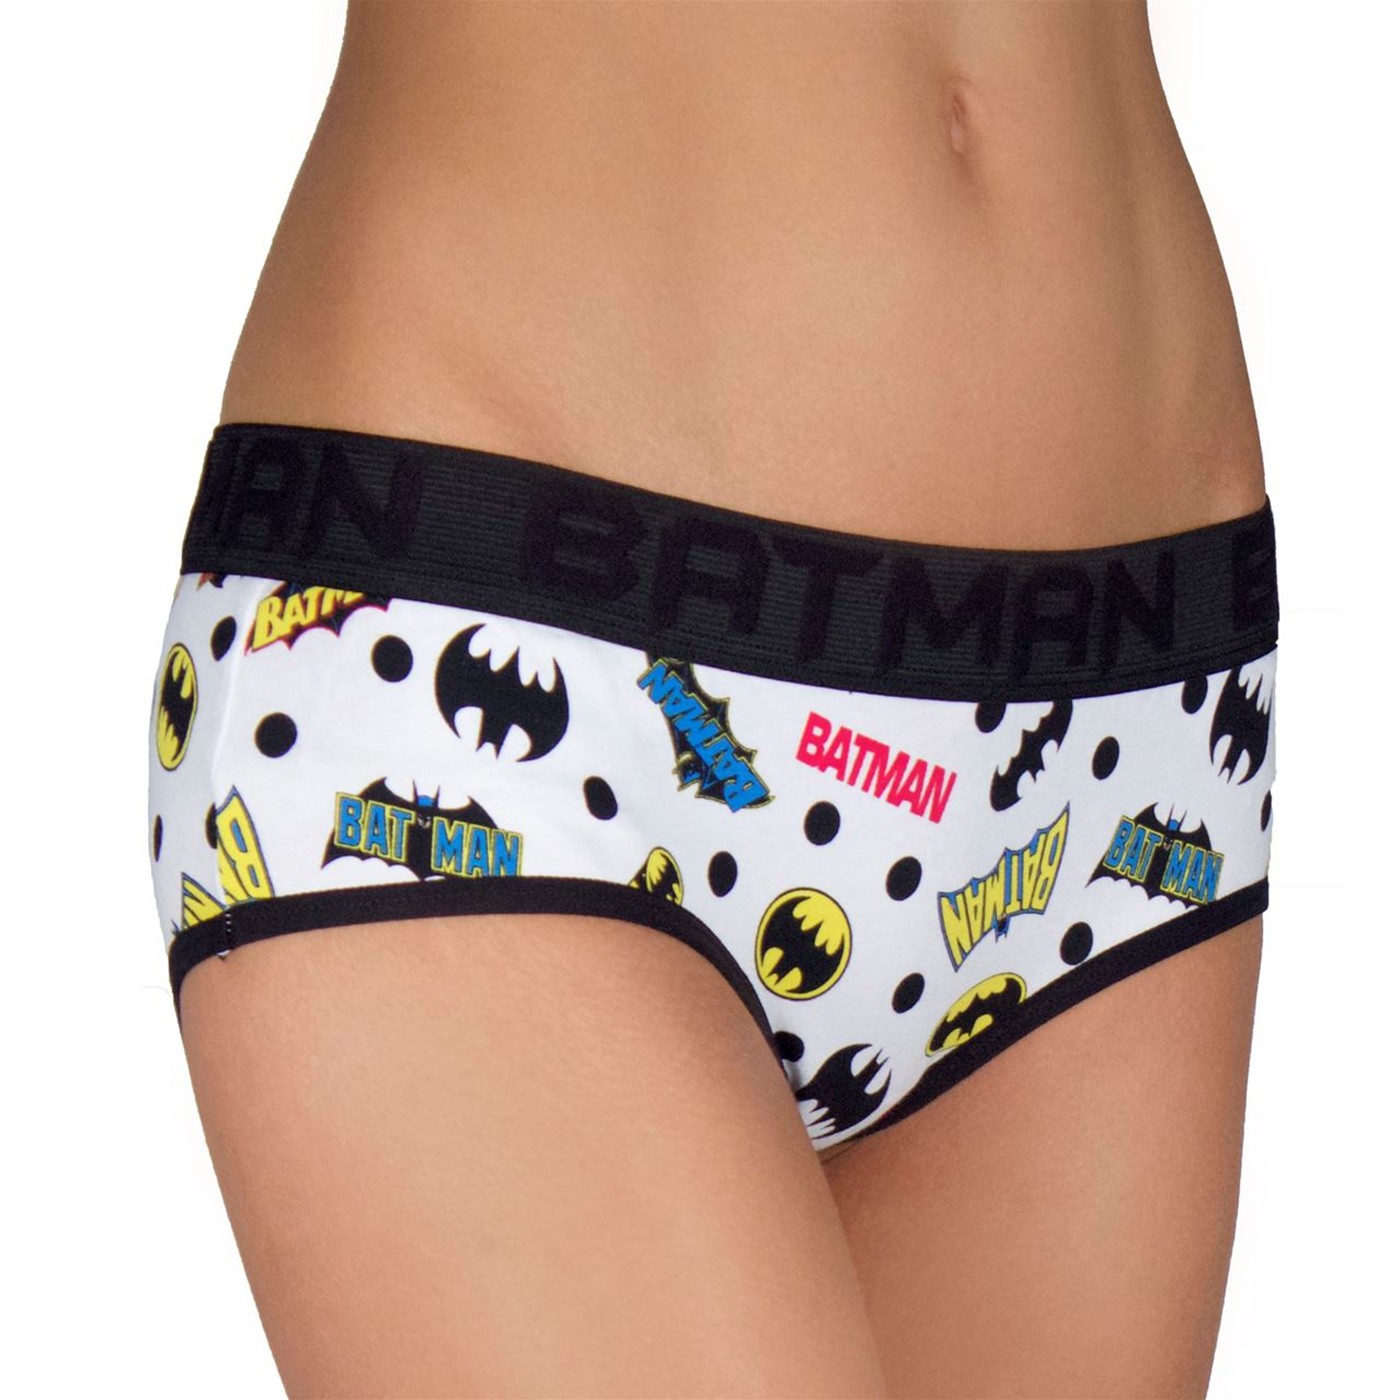 Batman w/Bats and Logos Hipster Panty